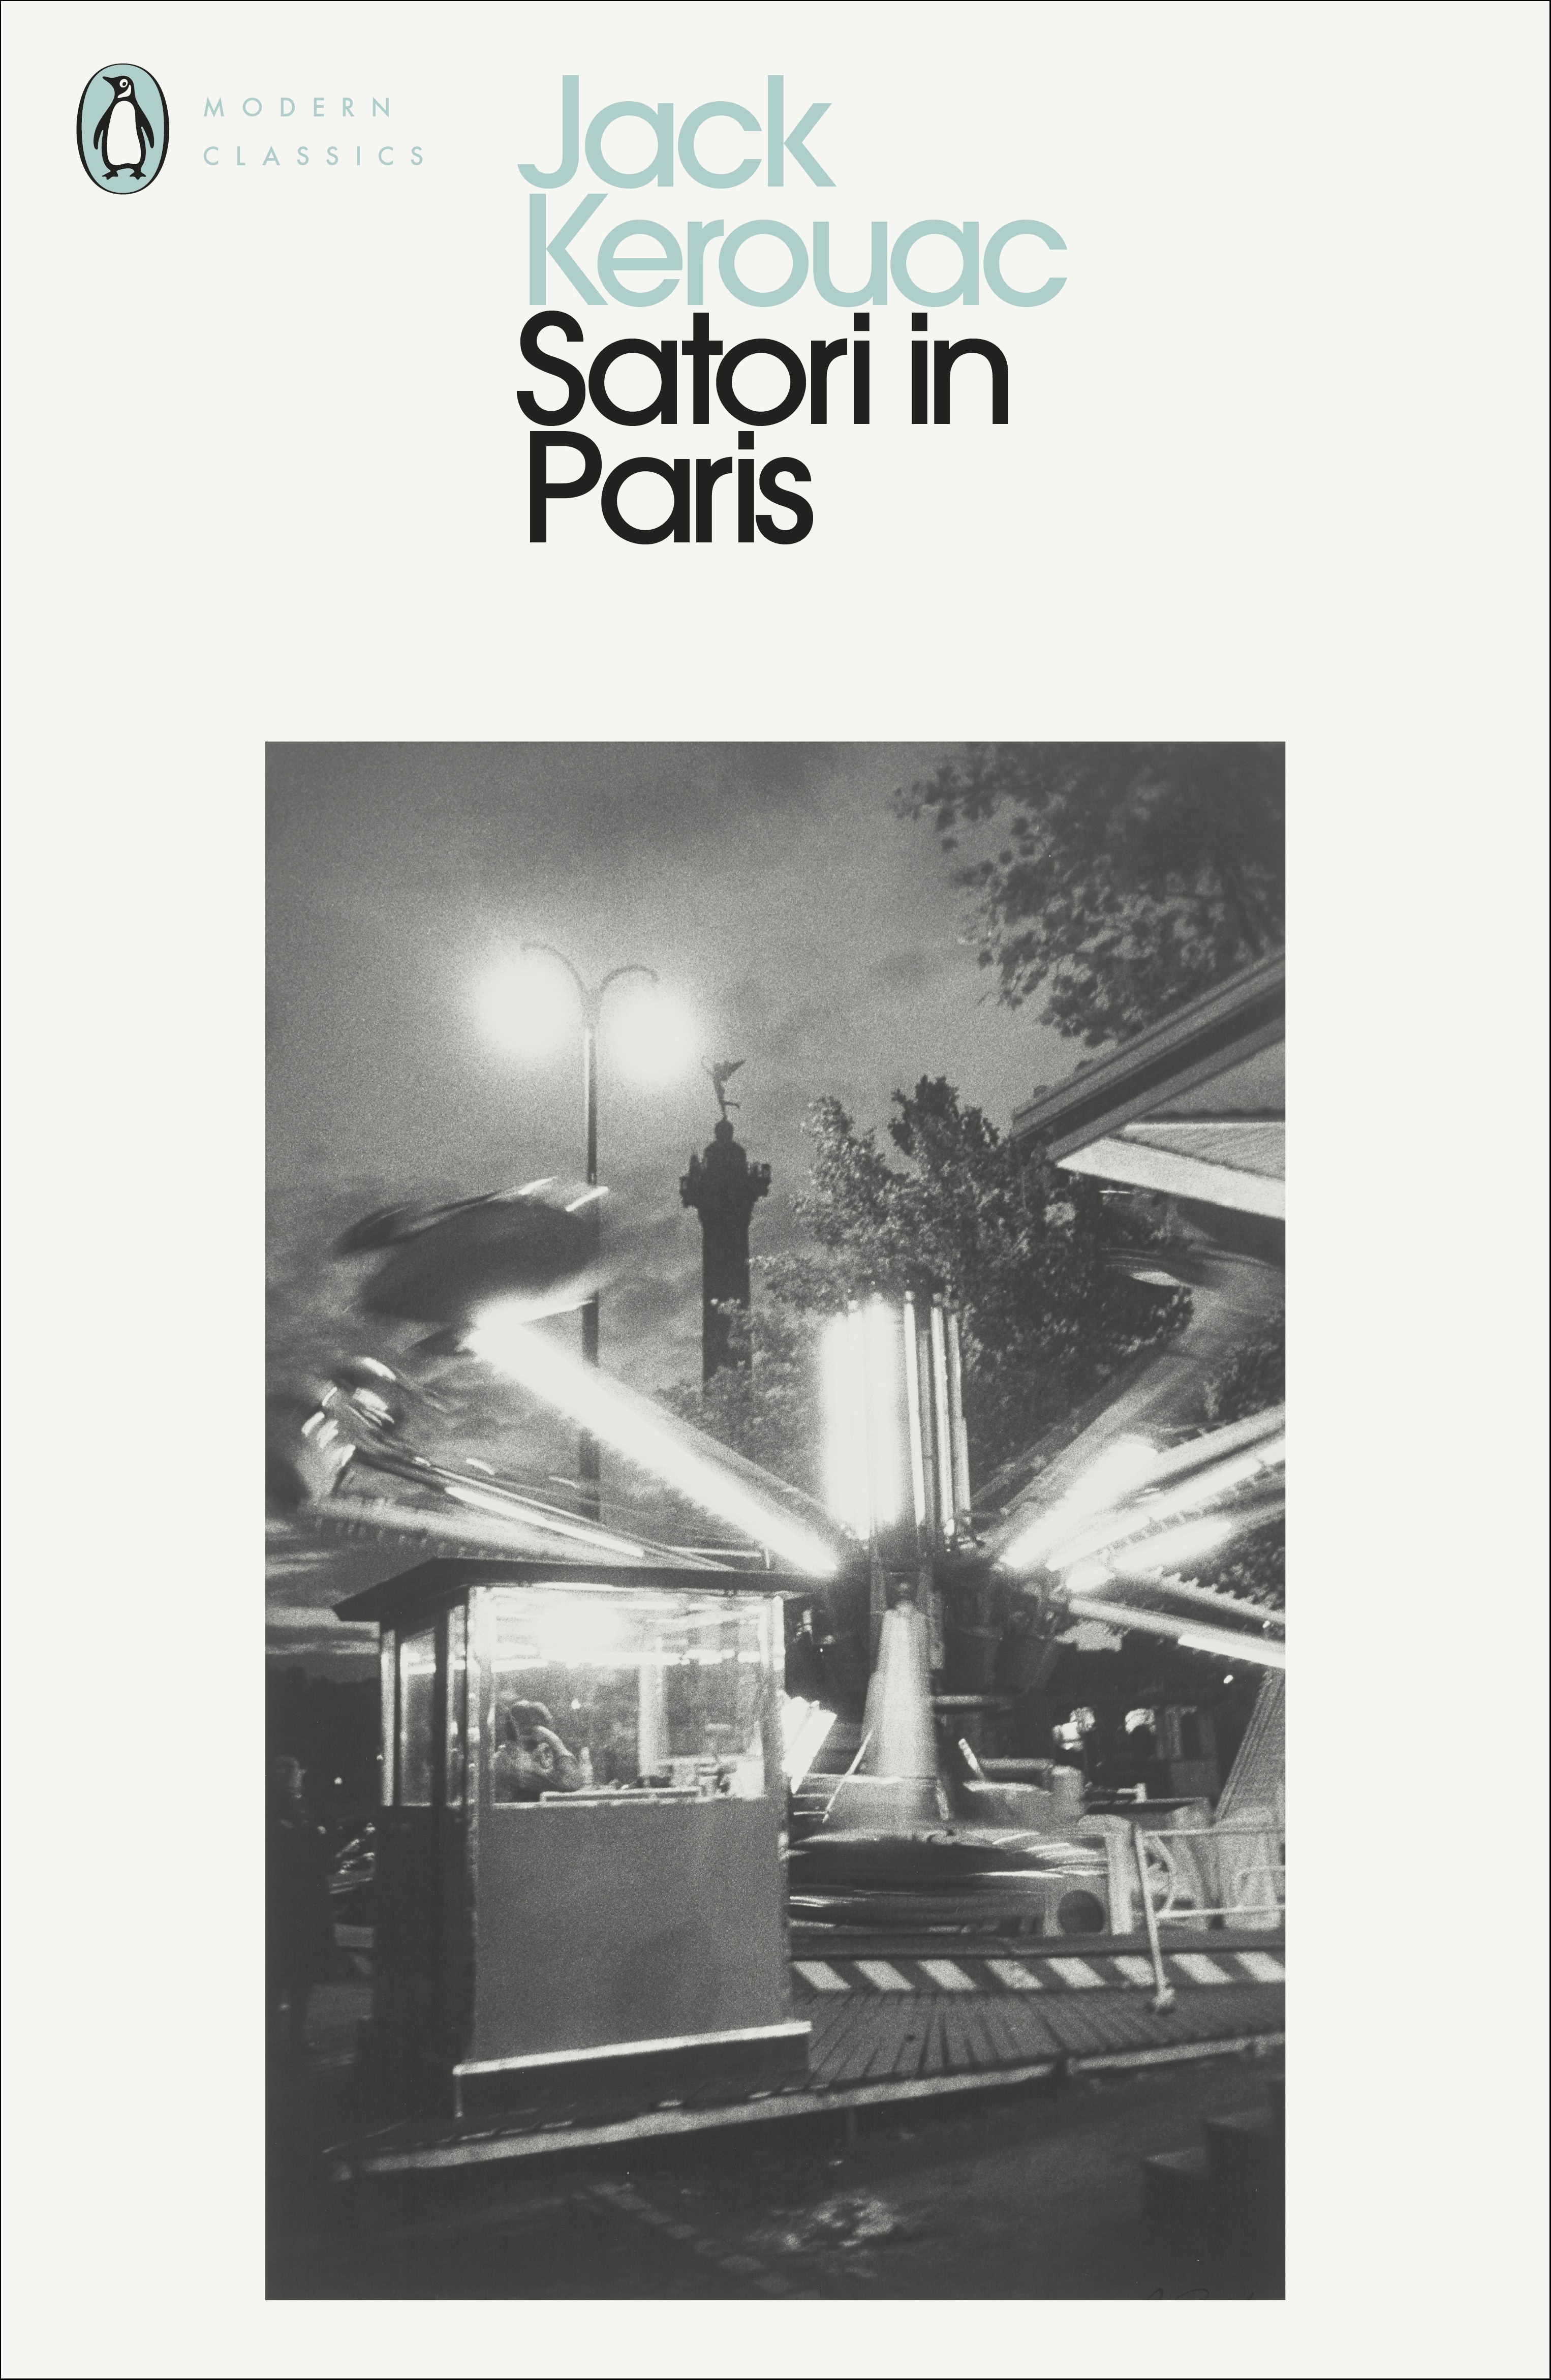 Book “Satori in Paris” by Jack Kerouac — March 1, 2012